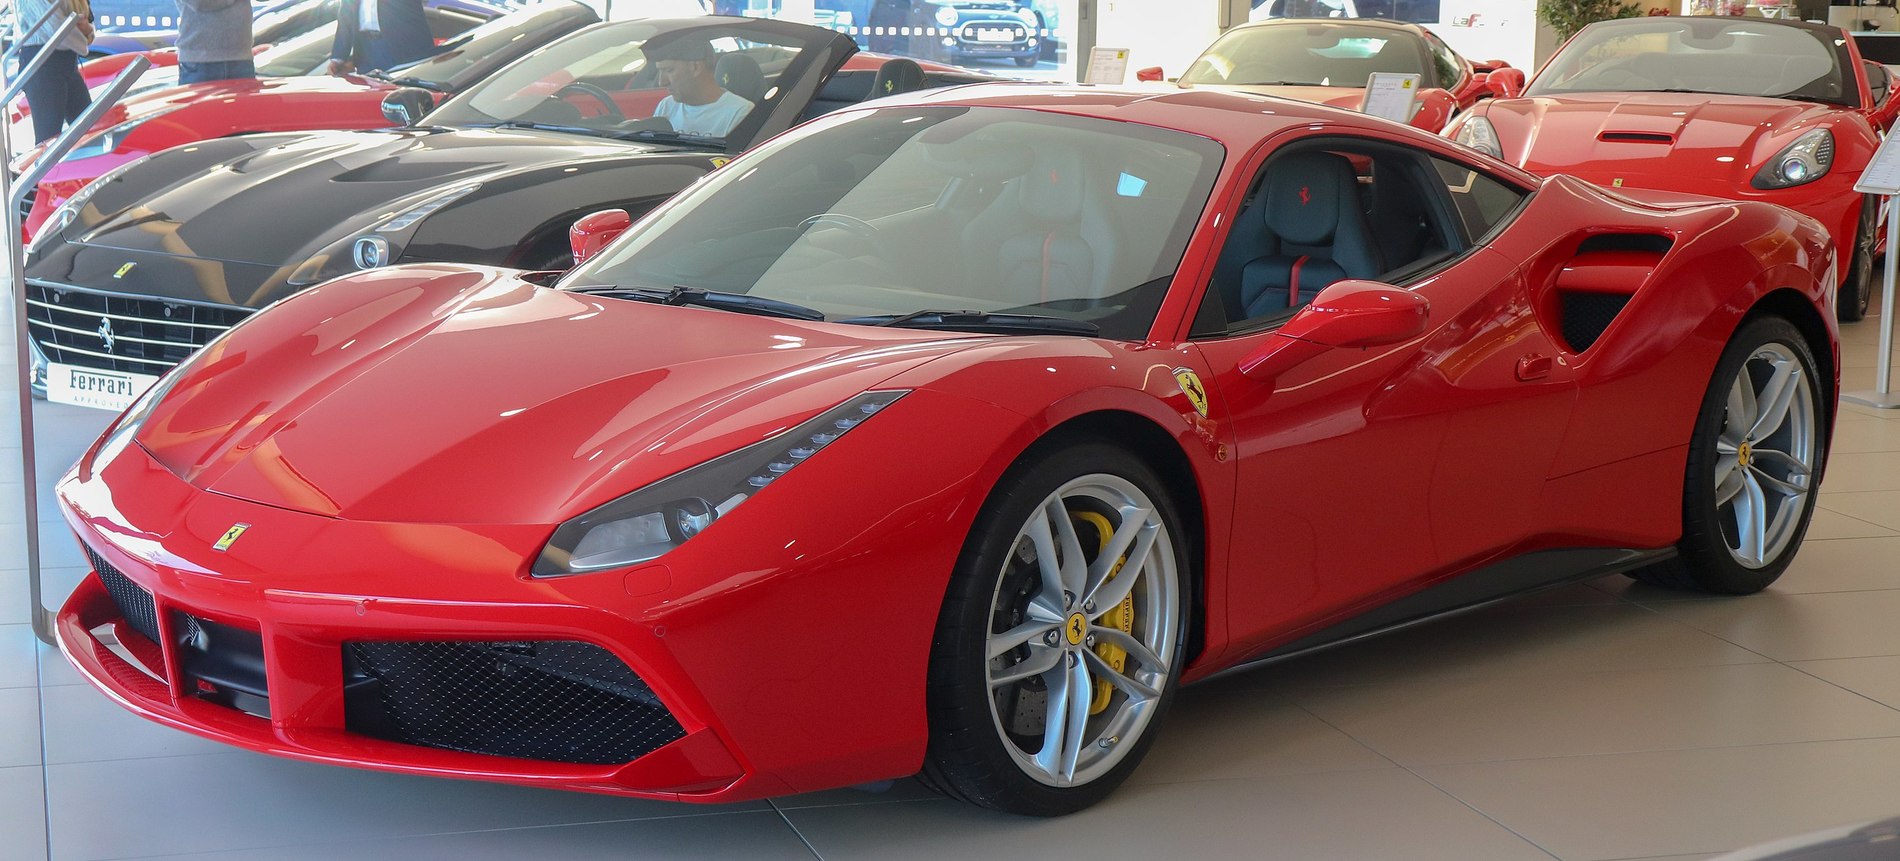 2880px-2017_Ferrari_488_GTB_Automatic_3.9.jpg